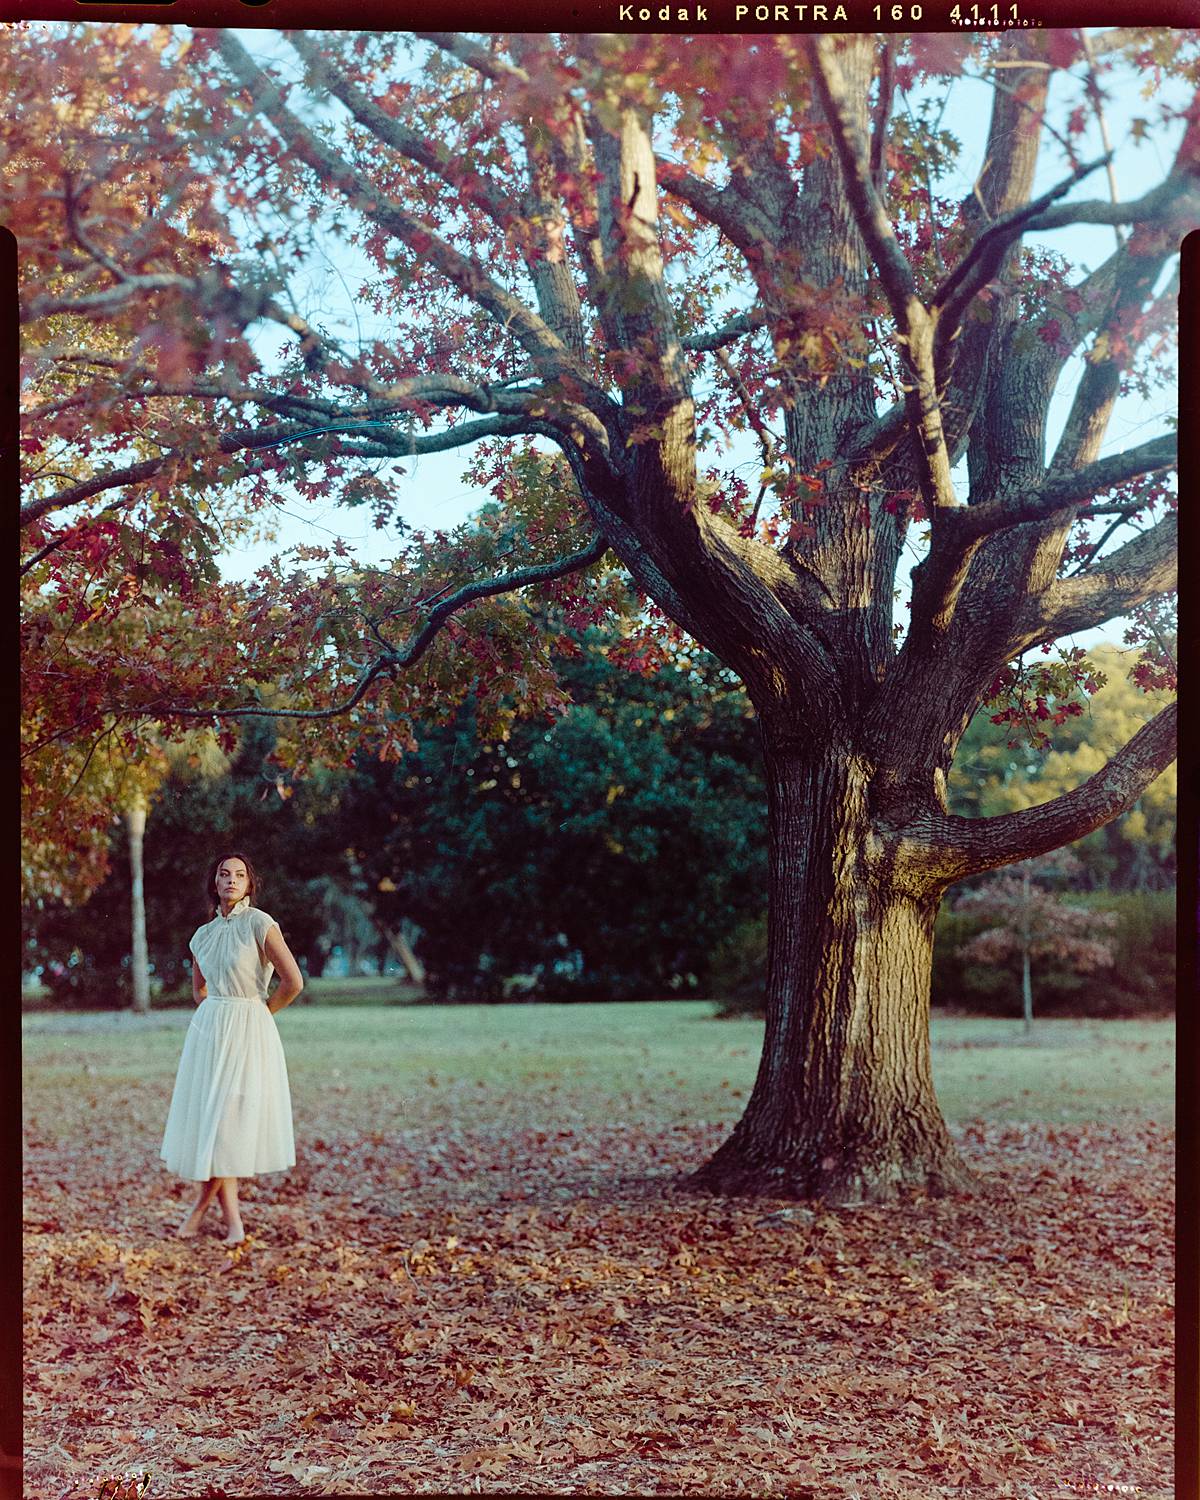 4x5 color film portrait on kodak portra 160 large format film in hampton park charleston south carolina